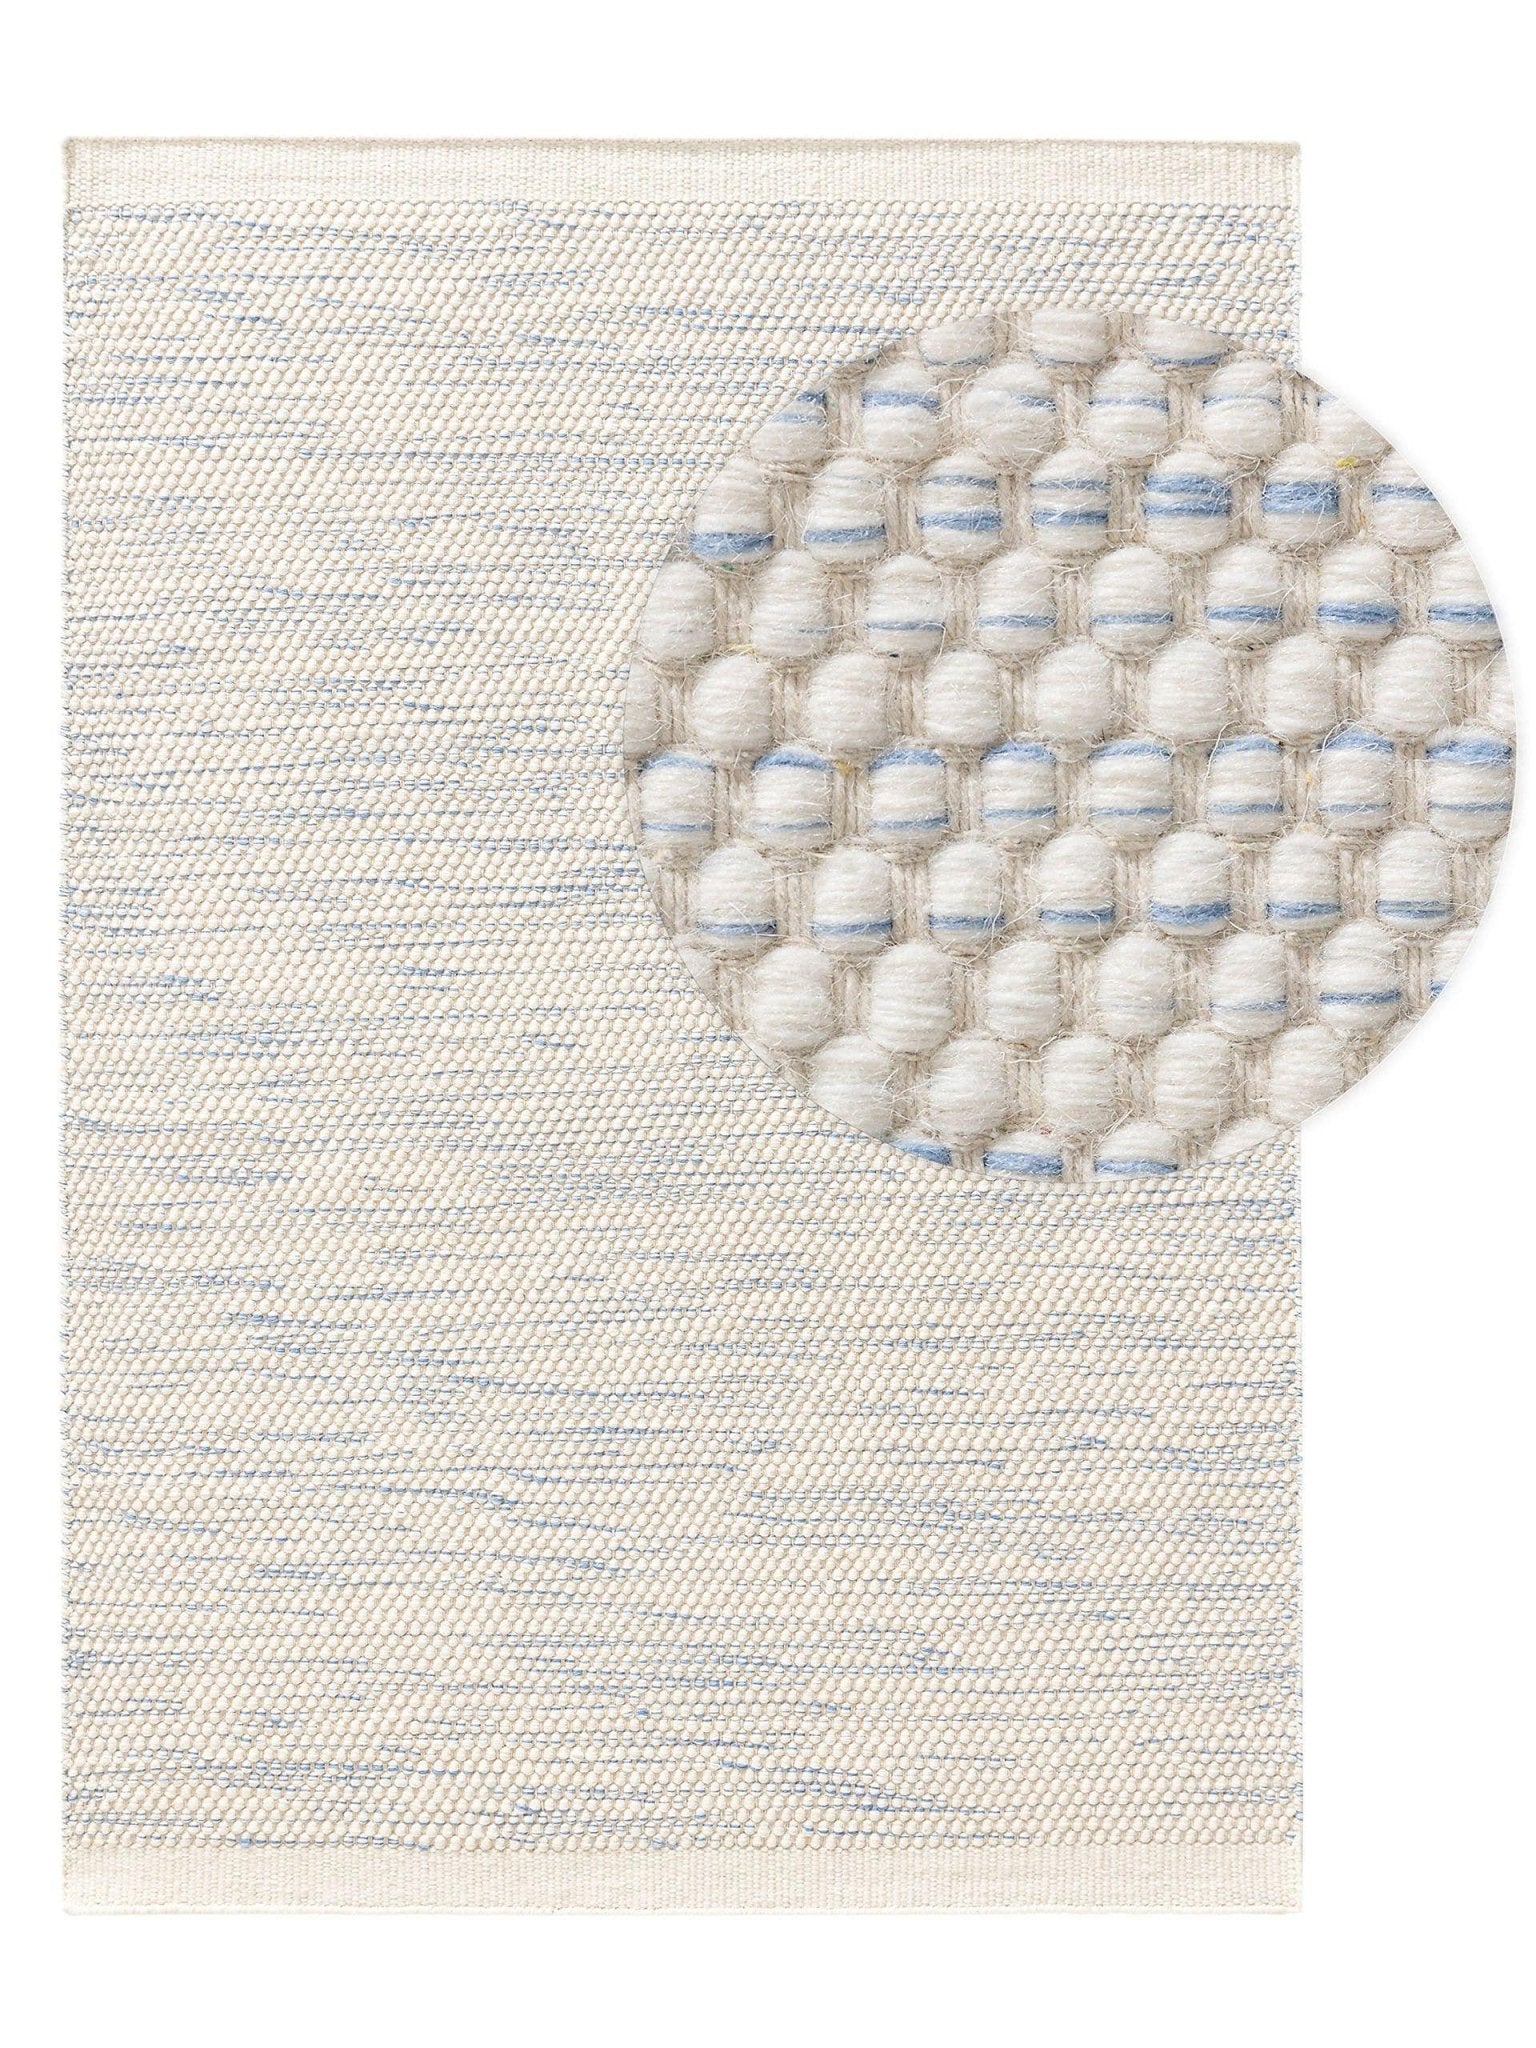 Lytte Teppich Hellblau/Weiß / 120x170 cm Kinderteppich Rocky